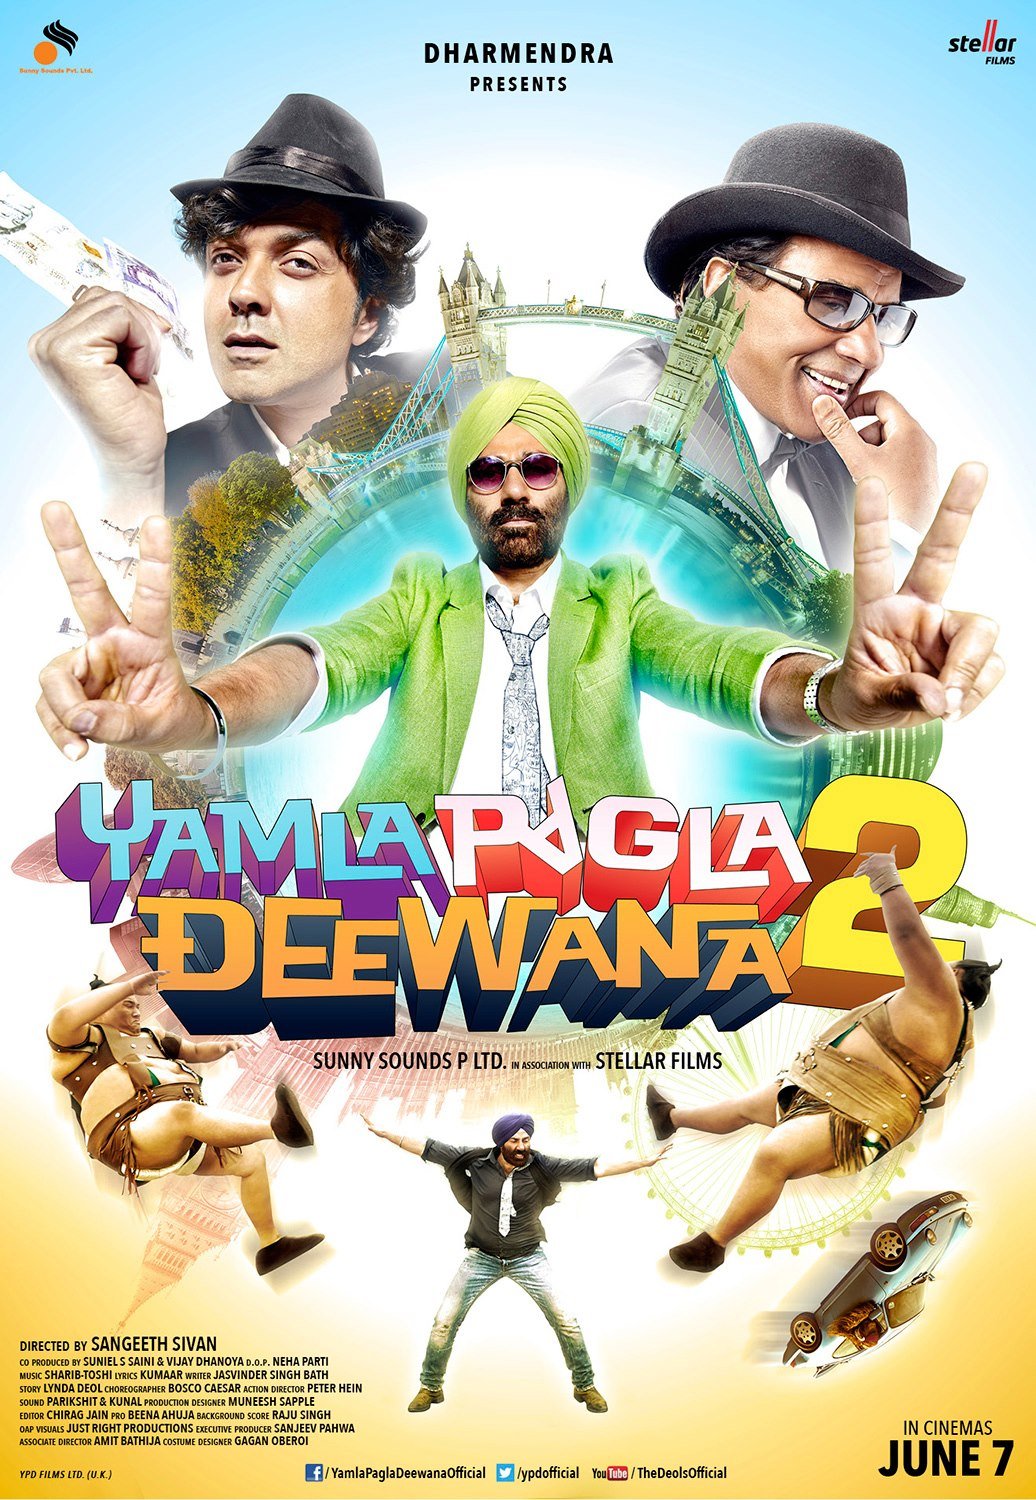 Hindi poster of the movie Yamla Pagla Deewana 2